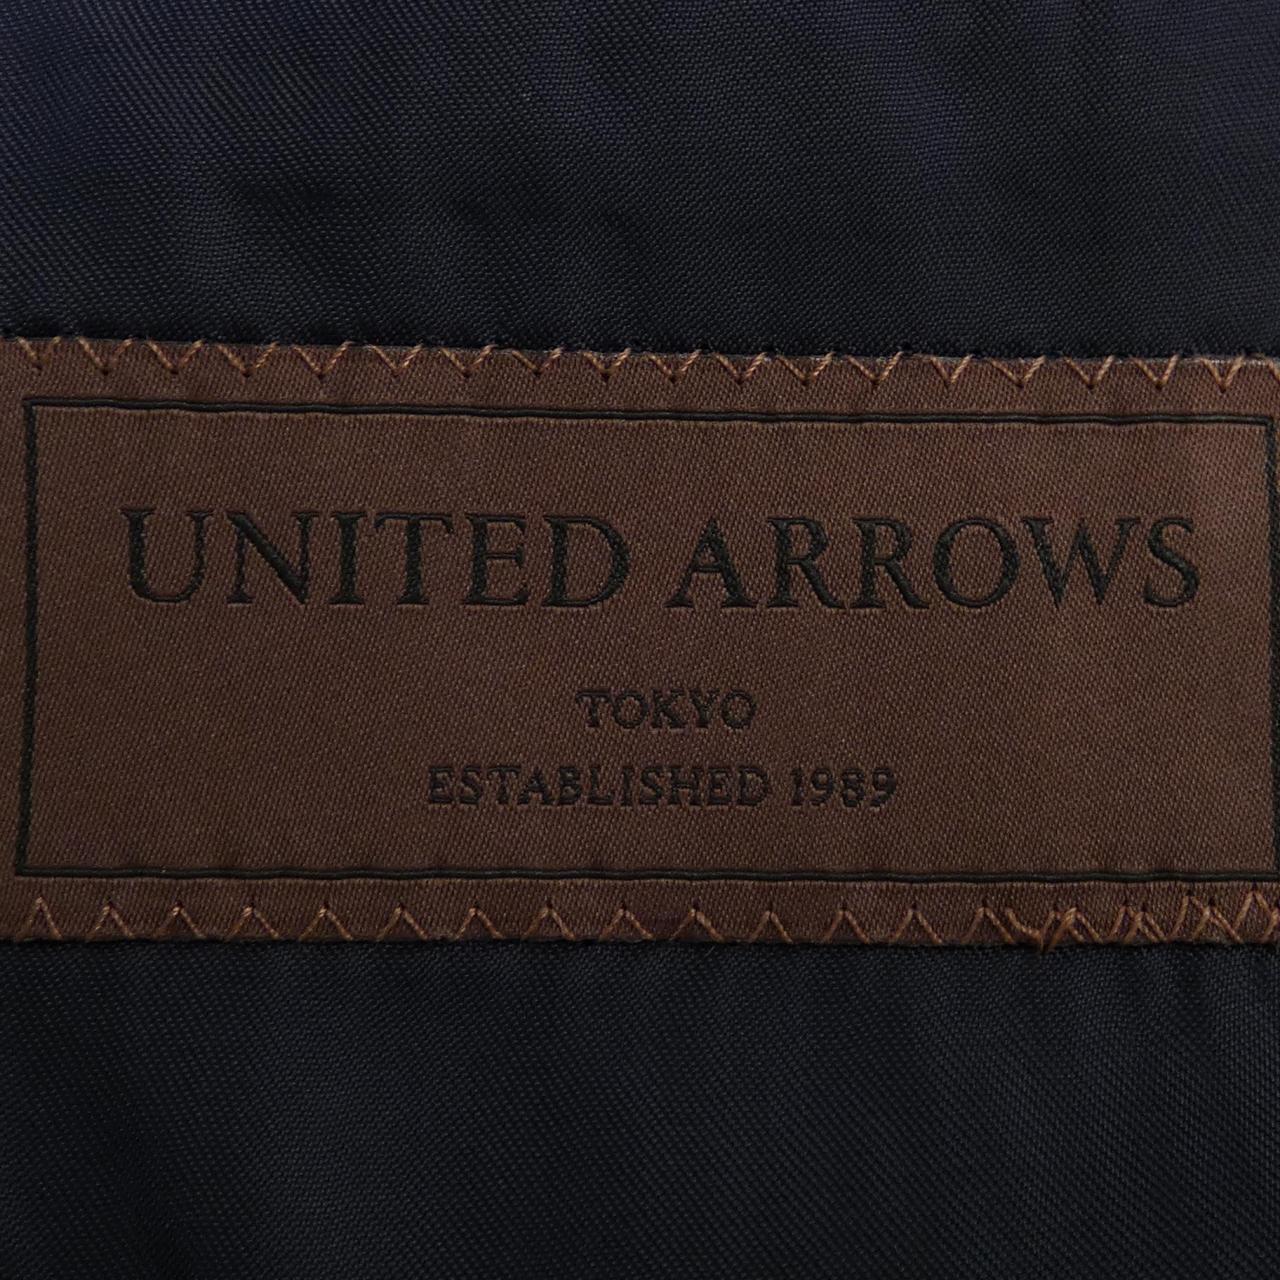 United Arrows UNITED ARROWS suit